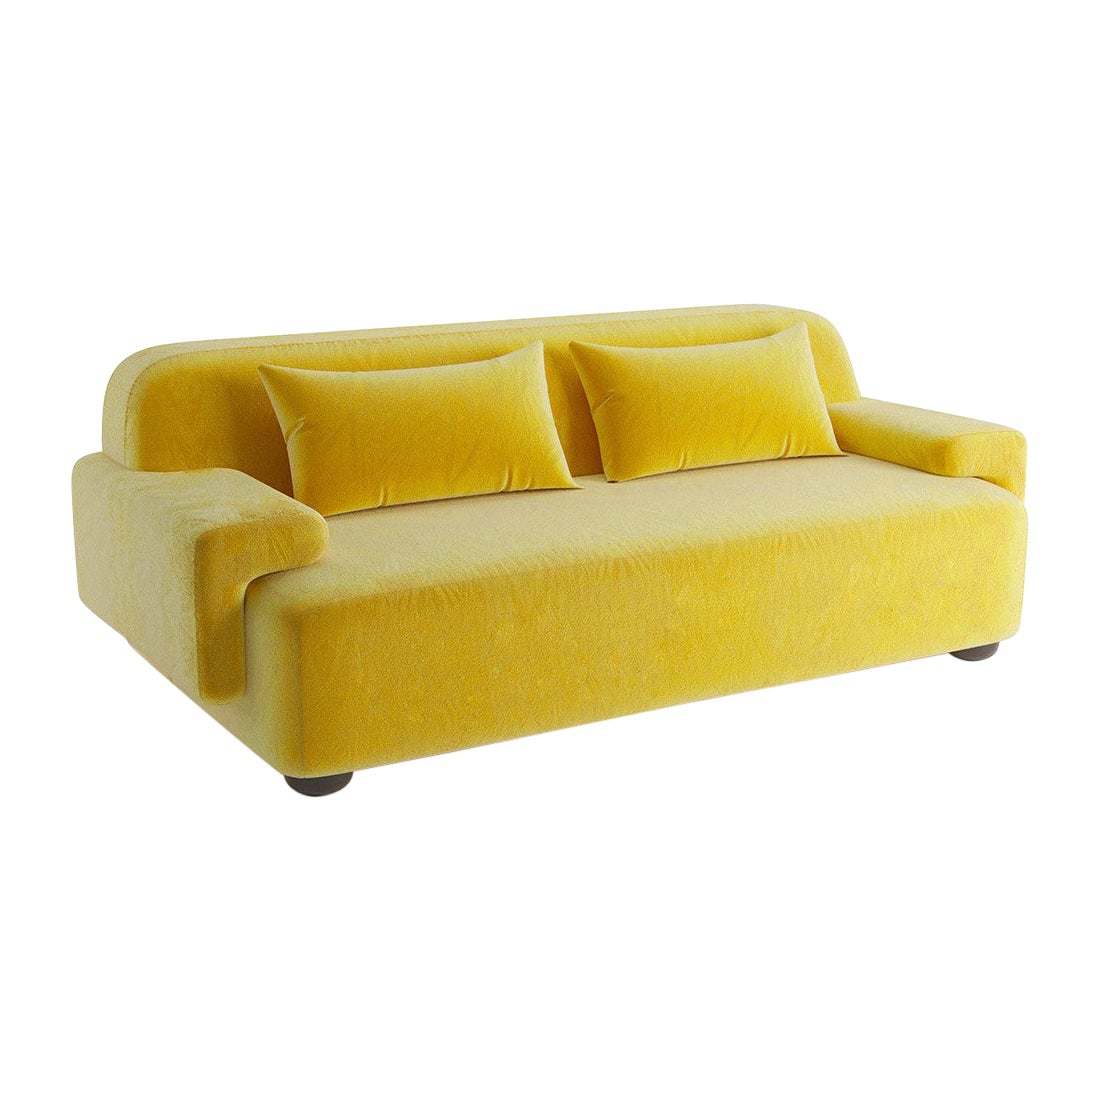 Popus Editions Lena 3 Seater Sofa in Yellow Verone Velvet Upholstery